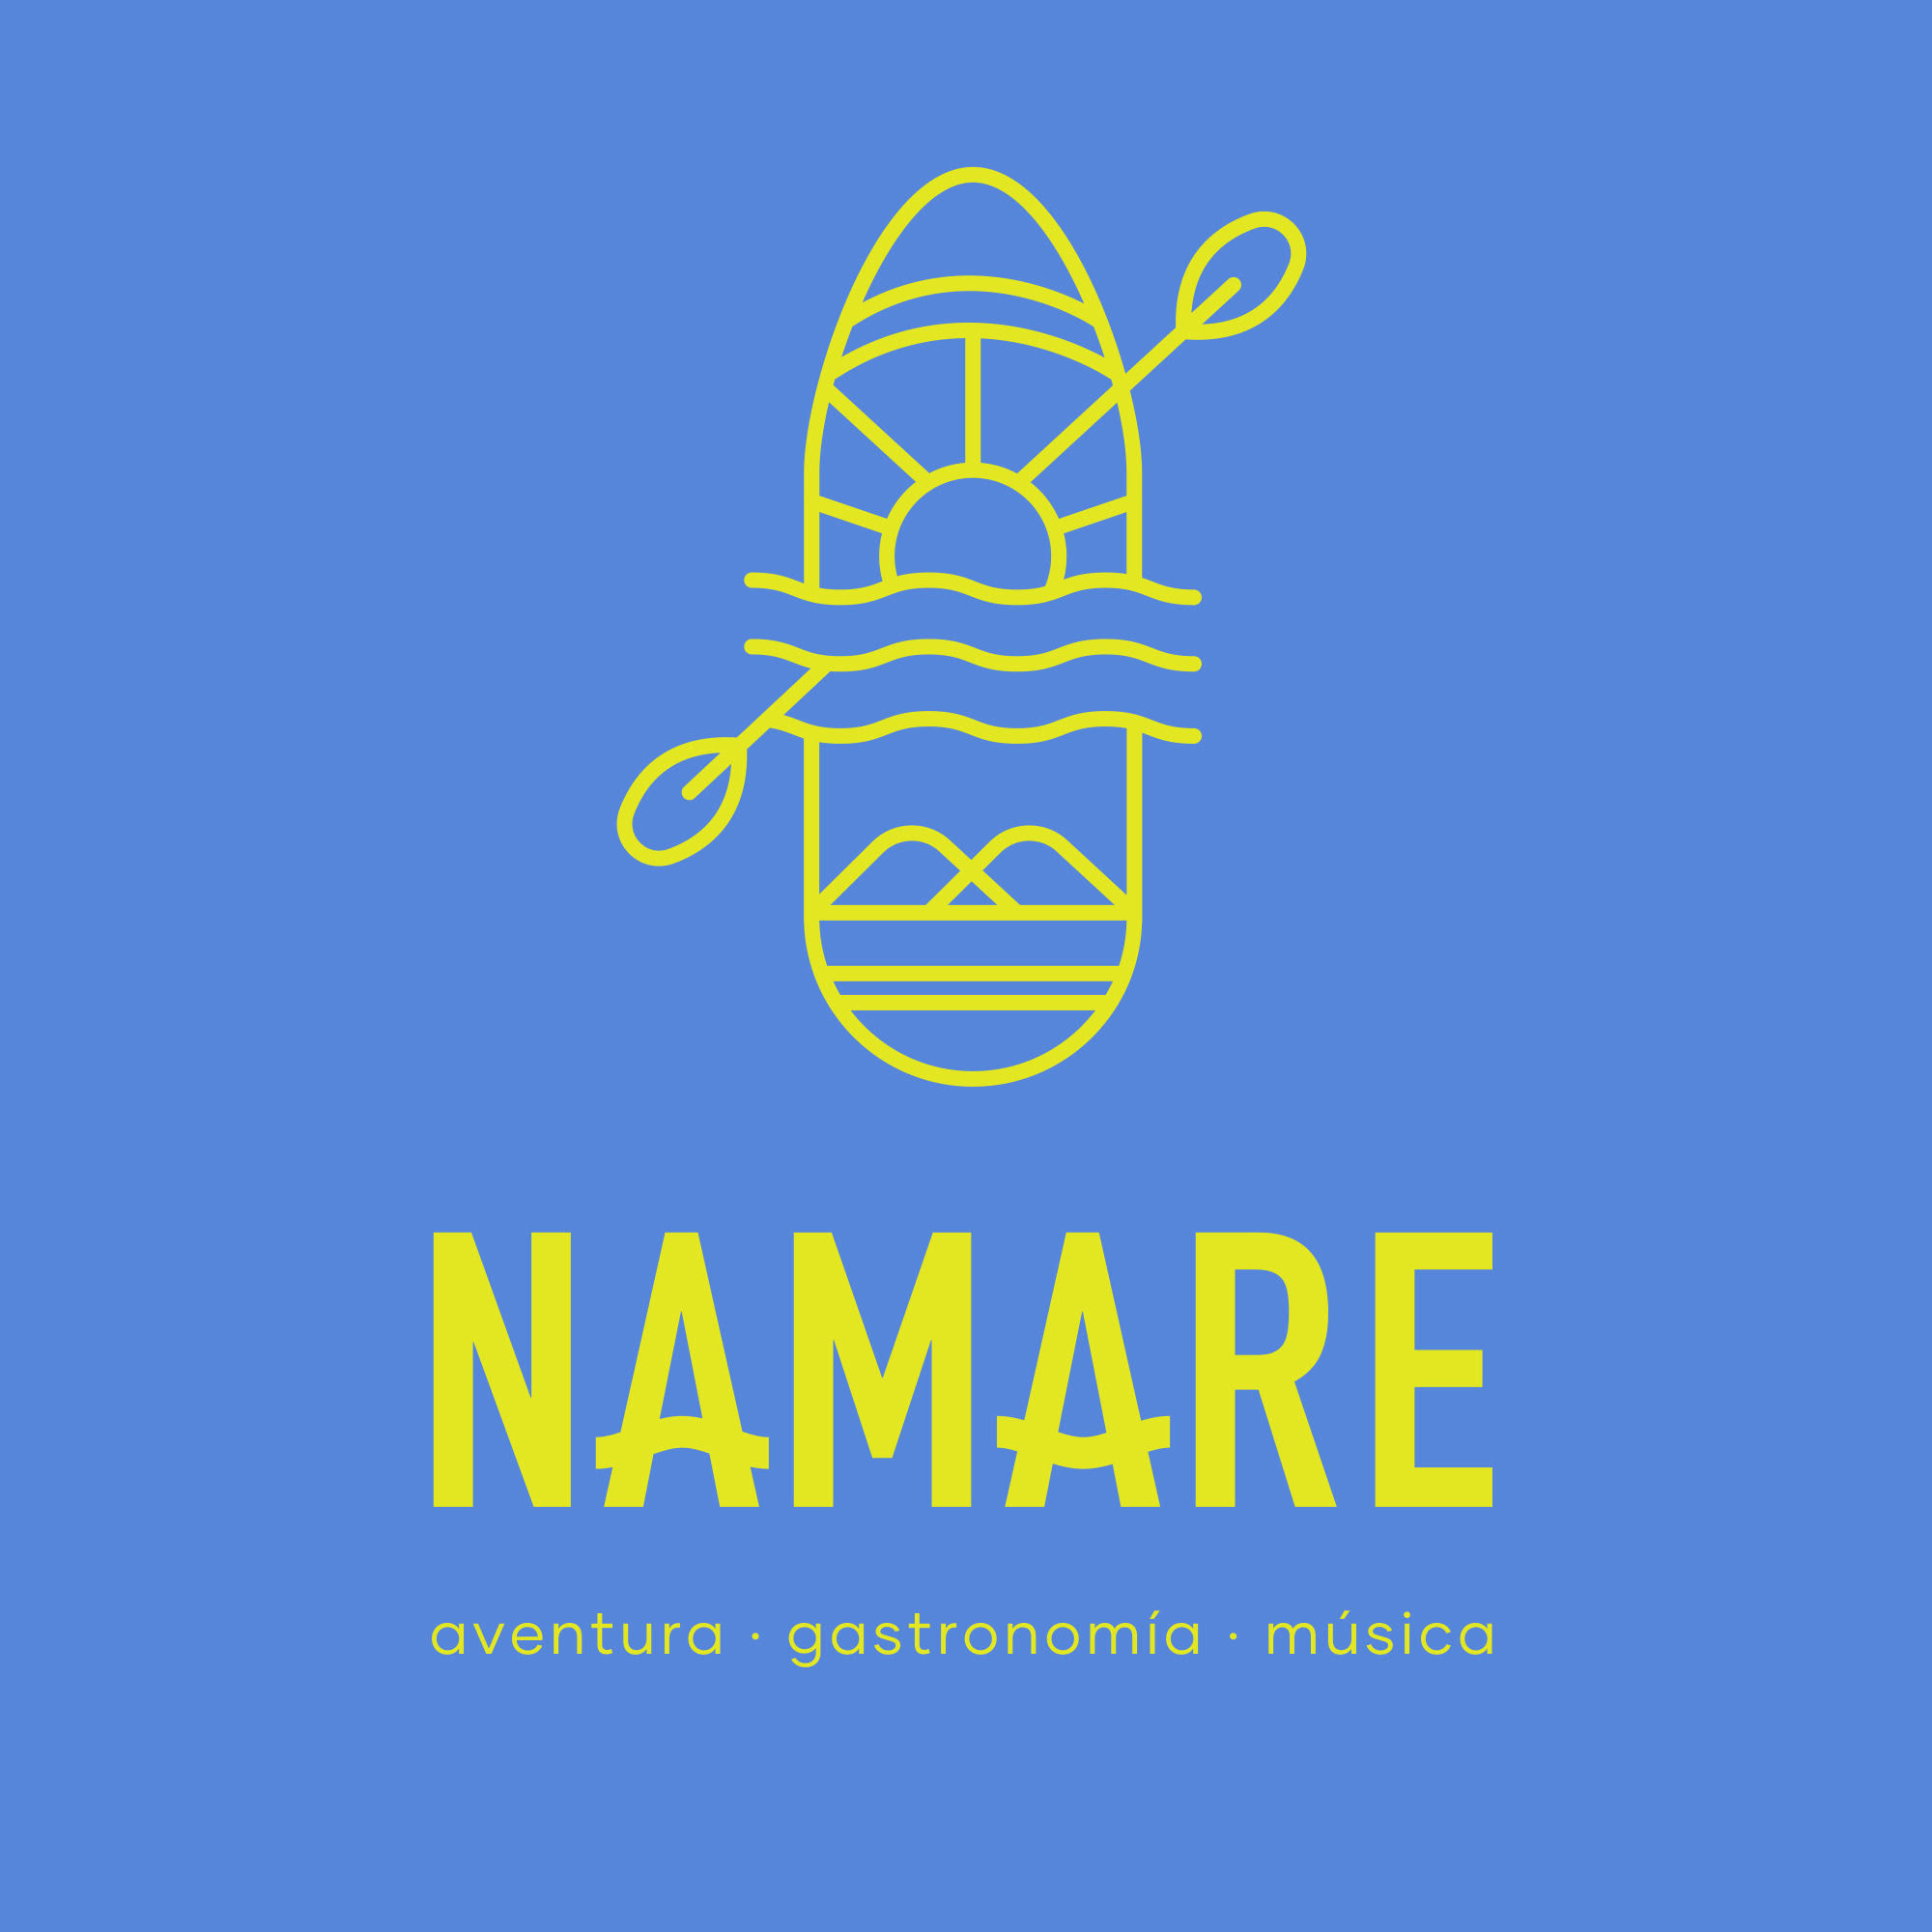 namare_logo_05